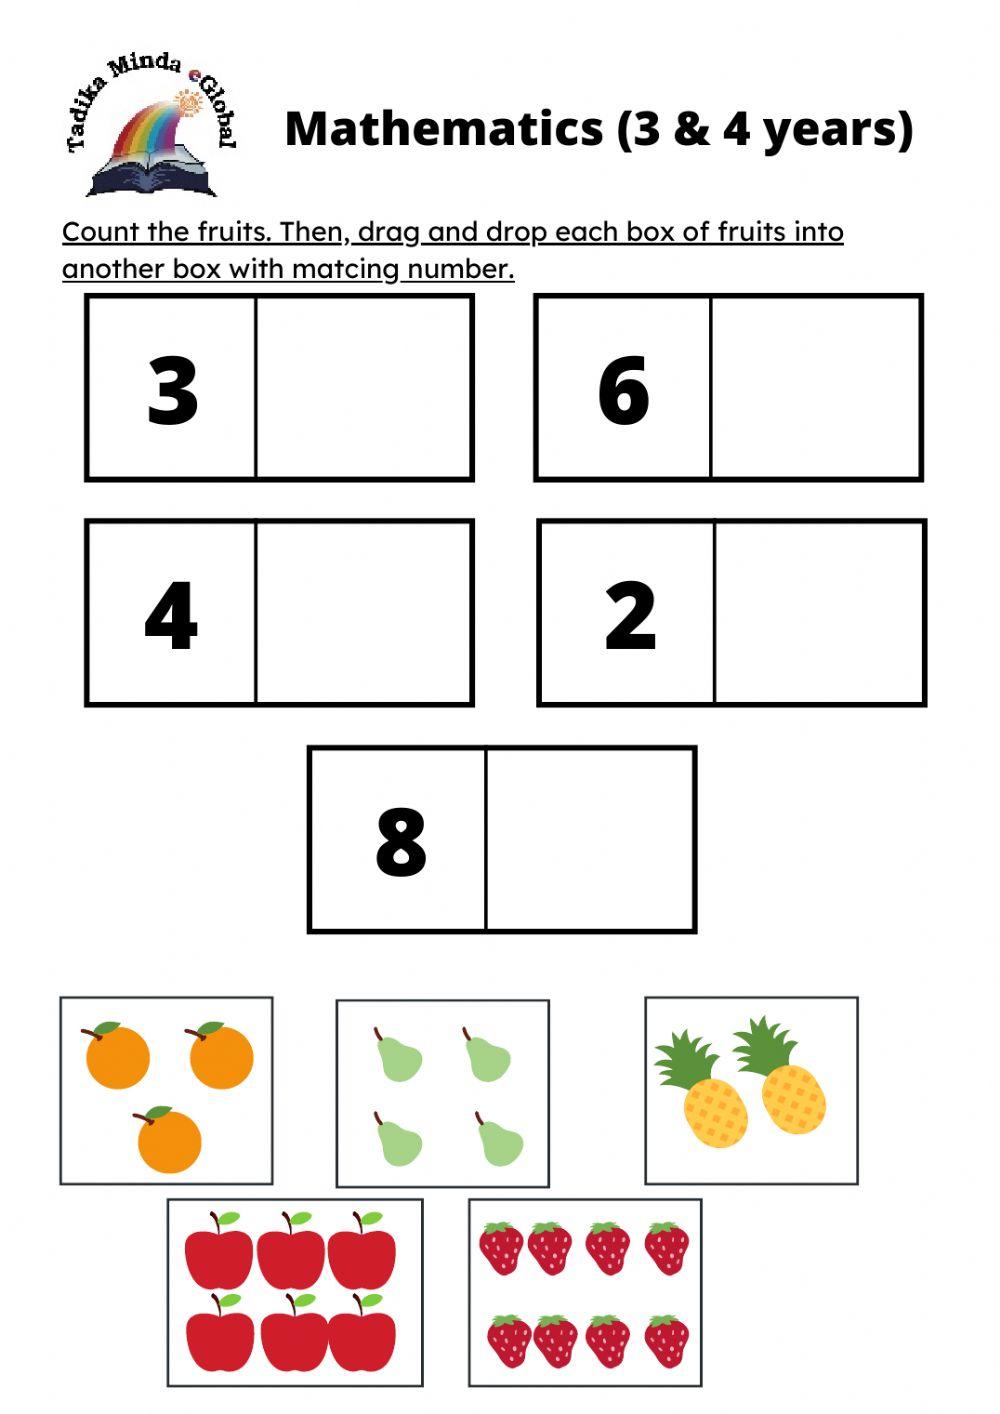 Mathematics 3 & 4 Years Old: Fruits 1